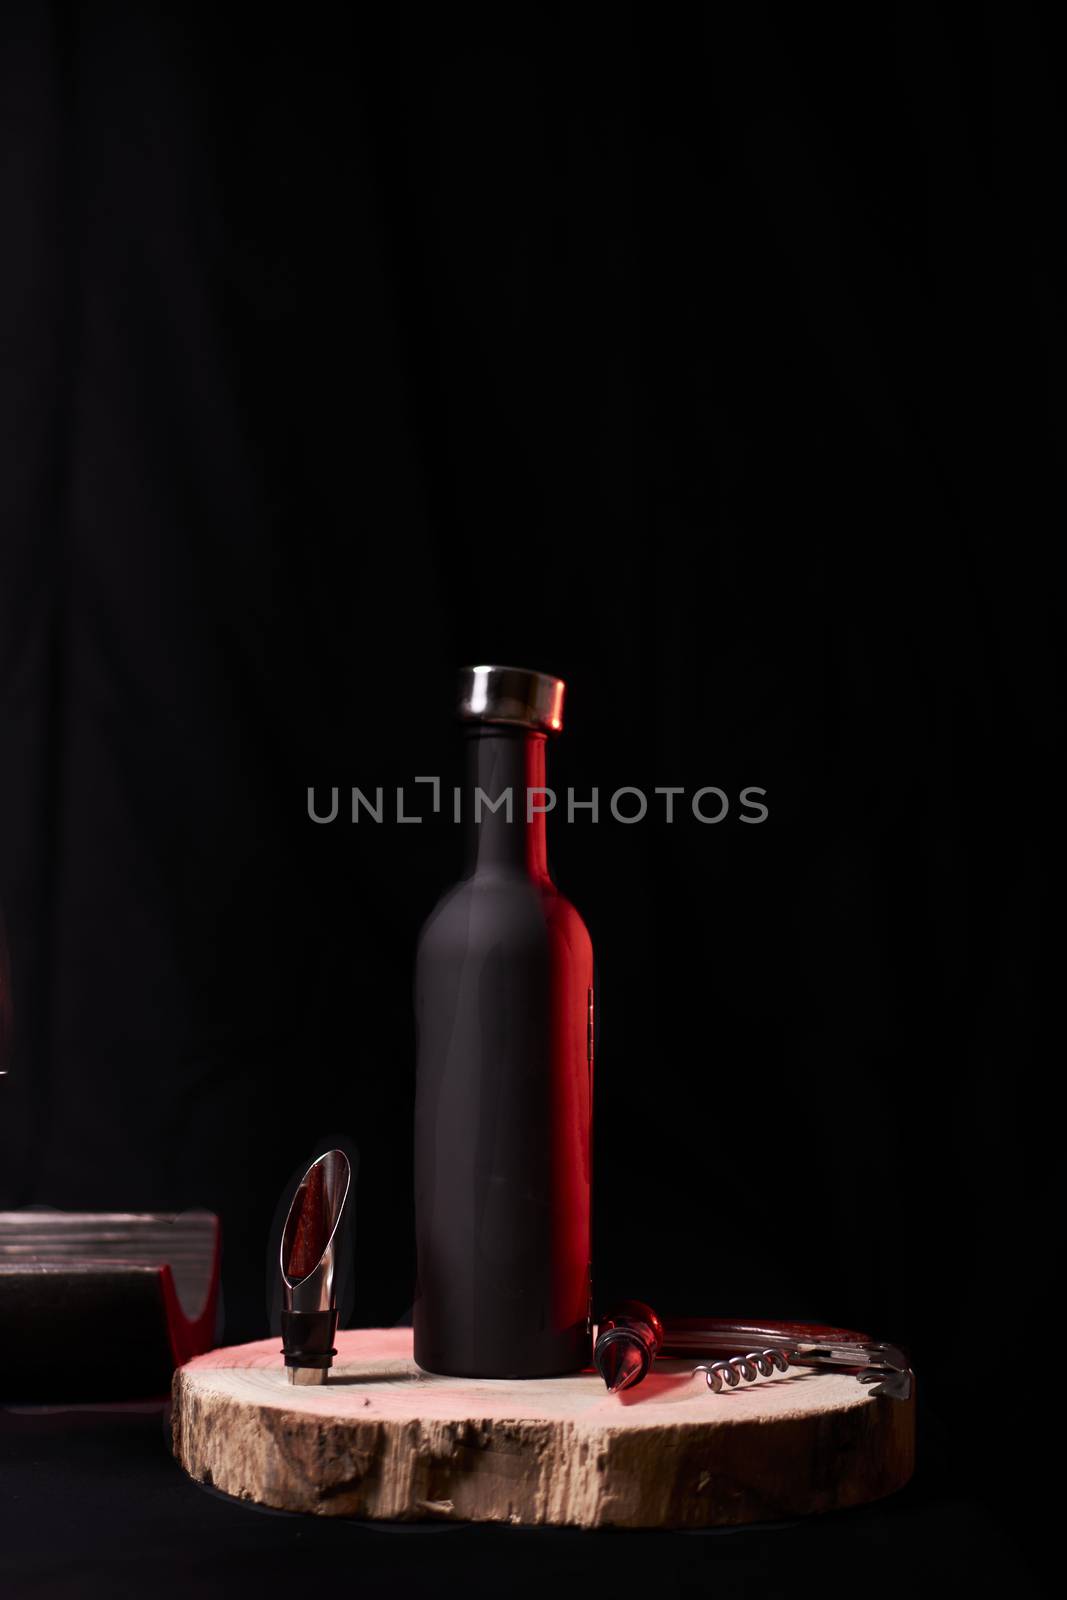 Bottle and wine utensils on wooden stump by raul_ruiz